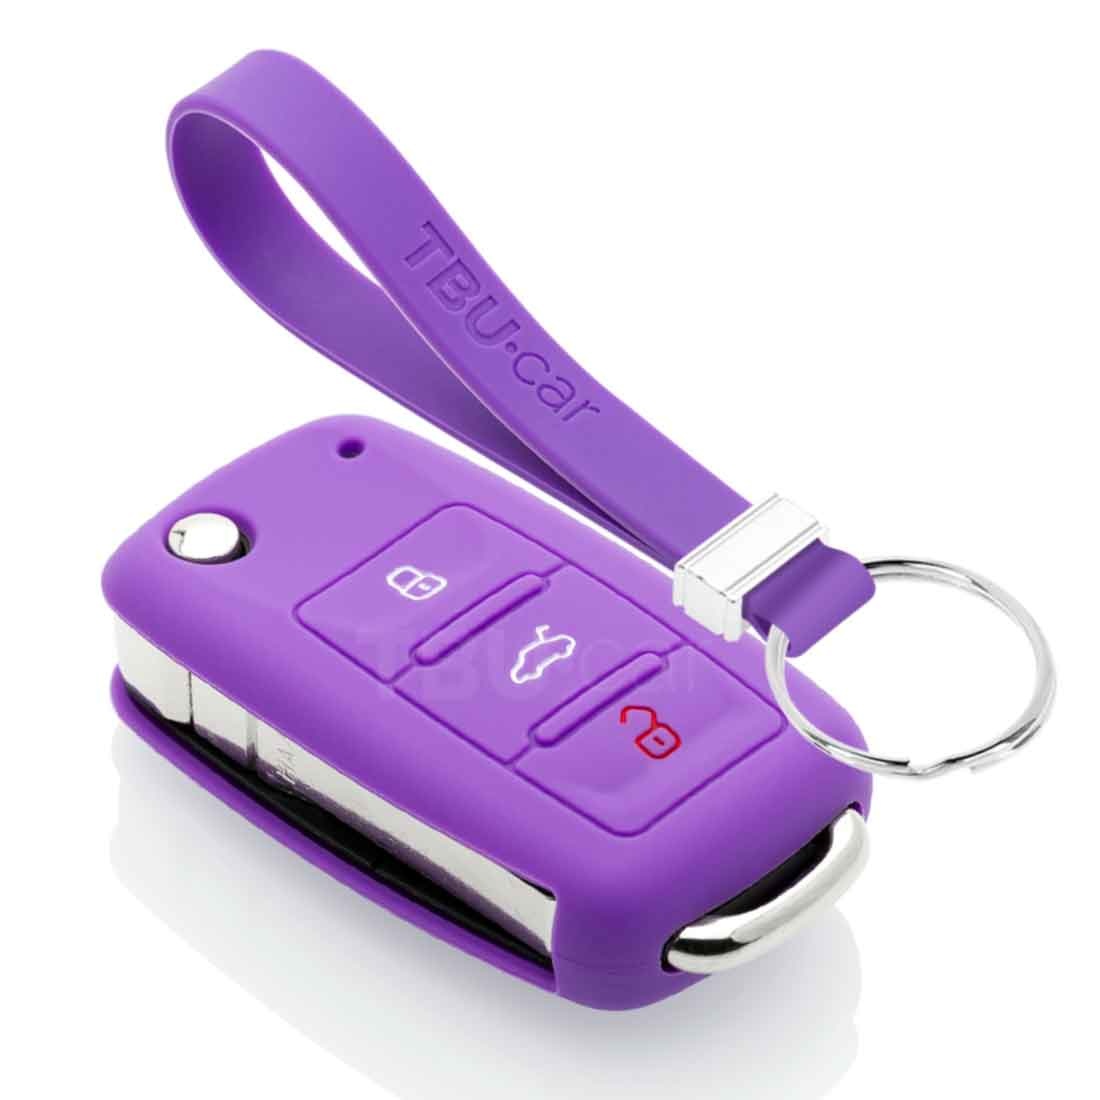 TBU car TBU car Autoschlüssel Hülle kompatibel mit Skoda 3 Tasten - Schutzhülle aus Silikon - Auto Schlüsselhülle Cover in Violett